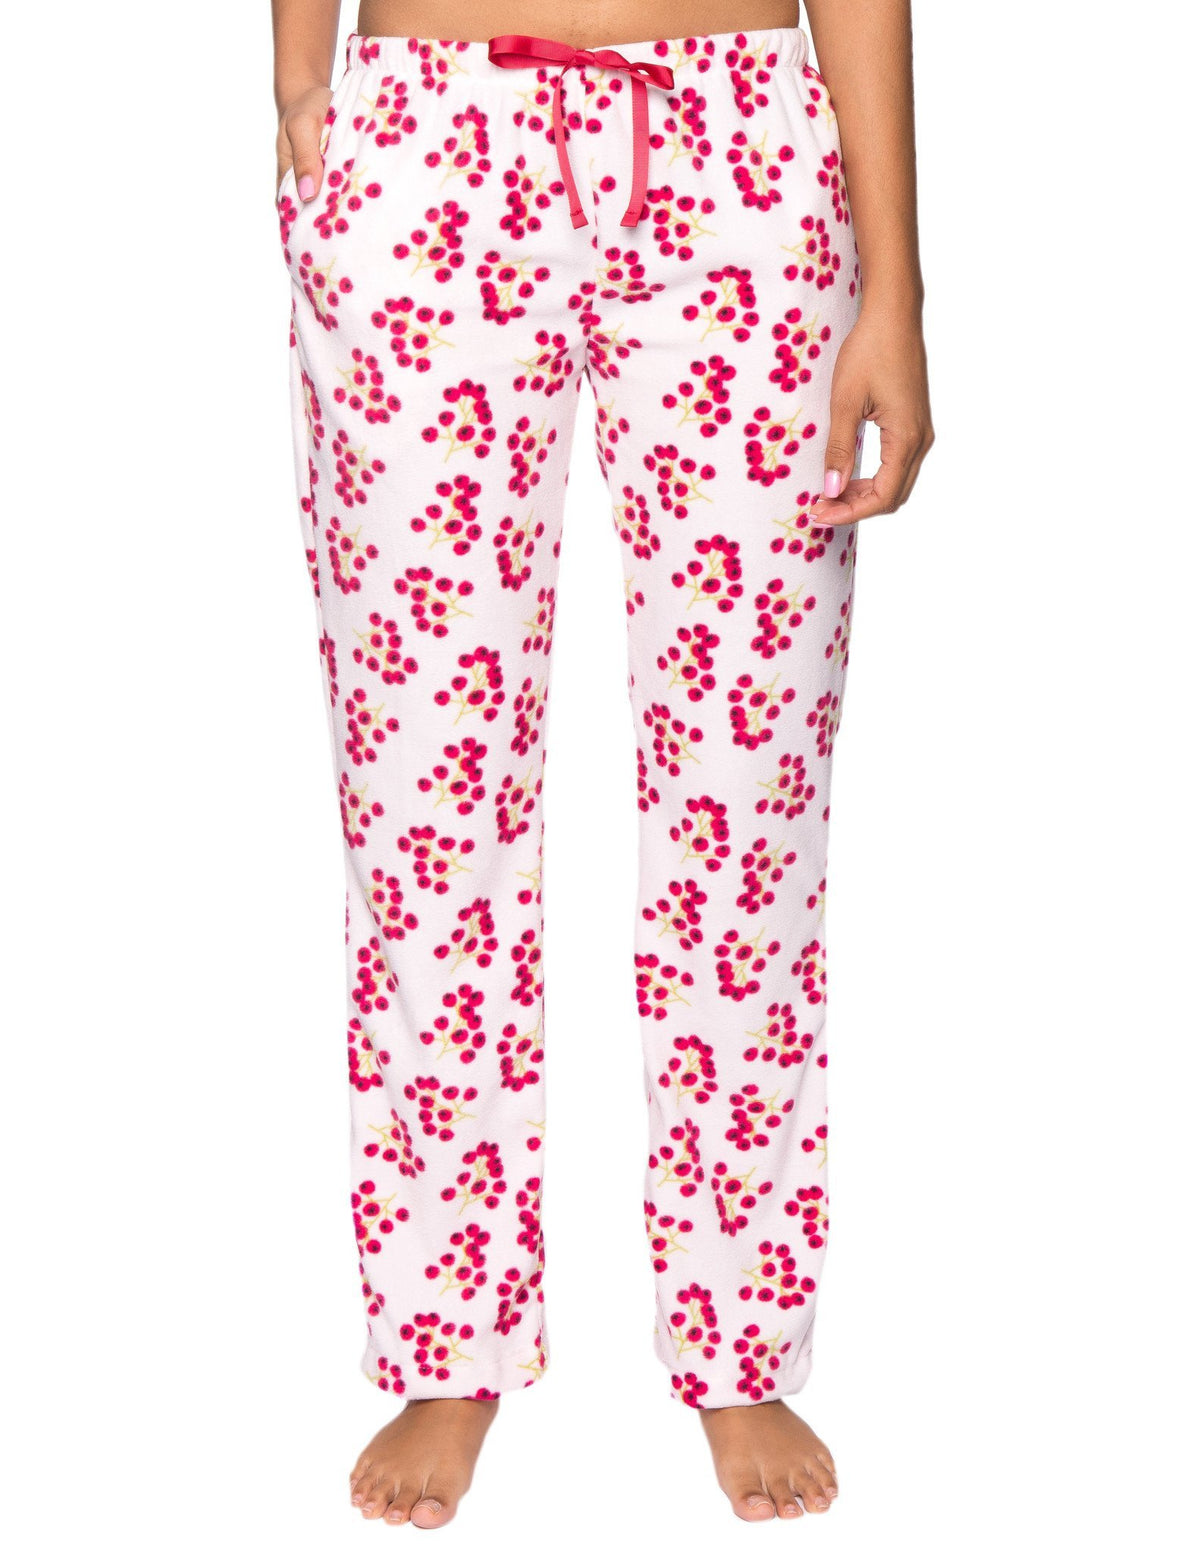 Women's Microfleece Lounge Pant - Winter Berries White/Red